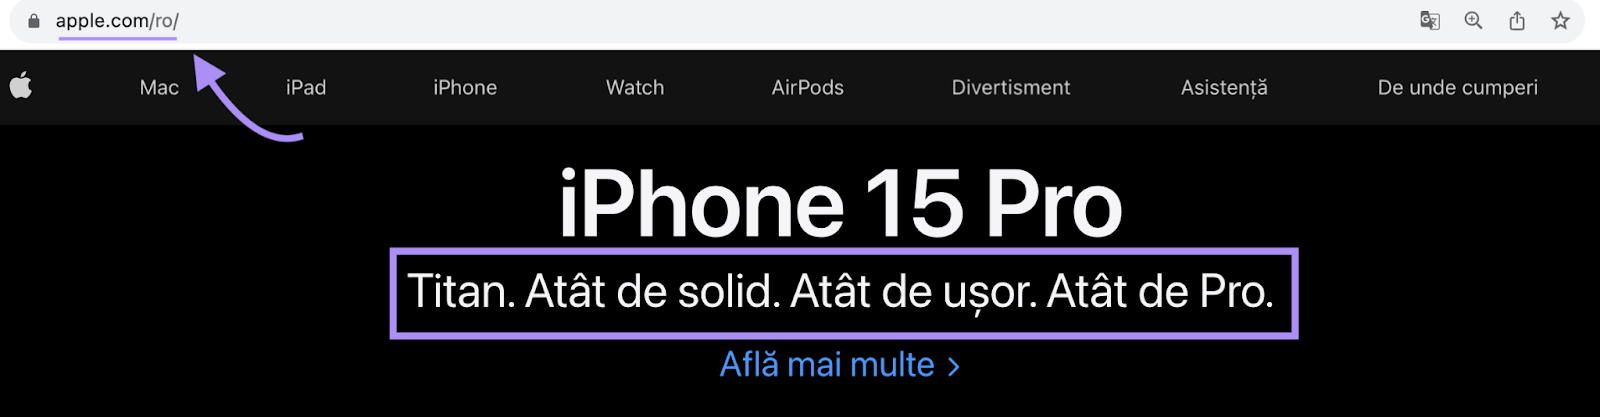 "iPhone 15 Pro. Titan. Atat de solid- Atat de usor. Atat de Pro." headline on "apple.com/ro/"